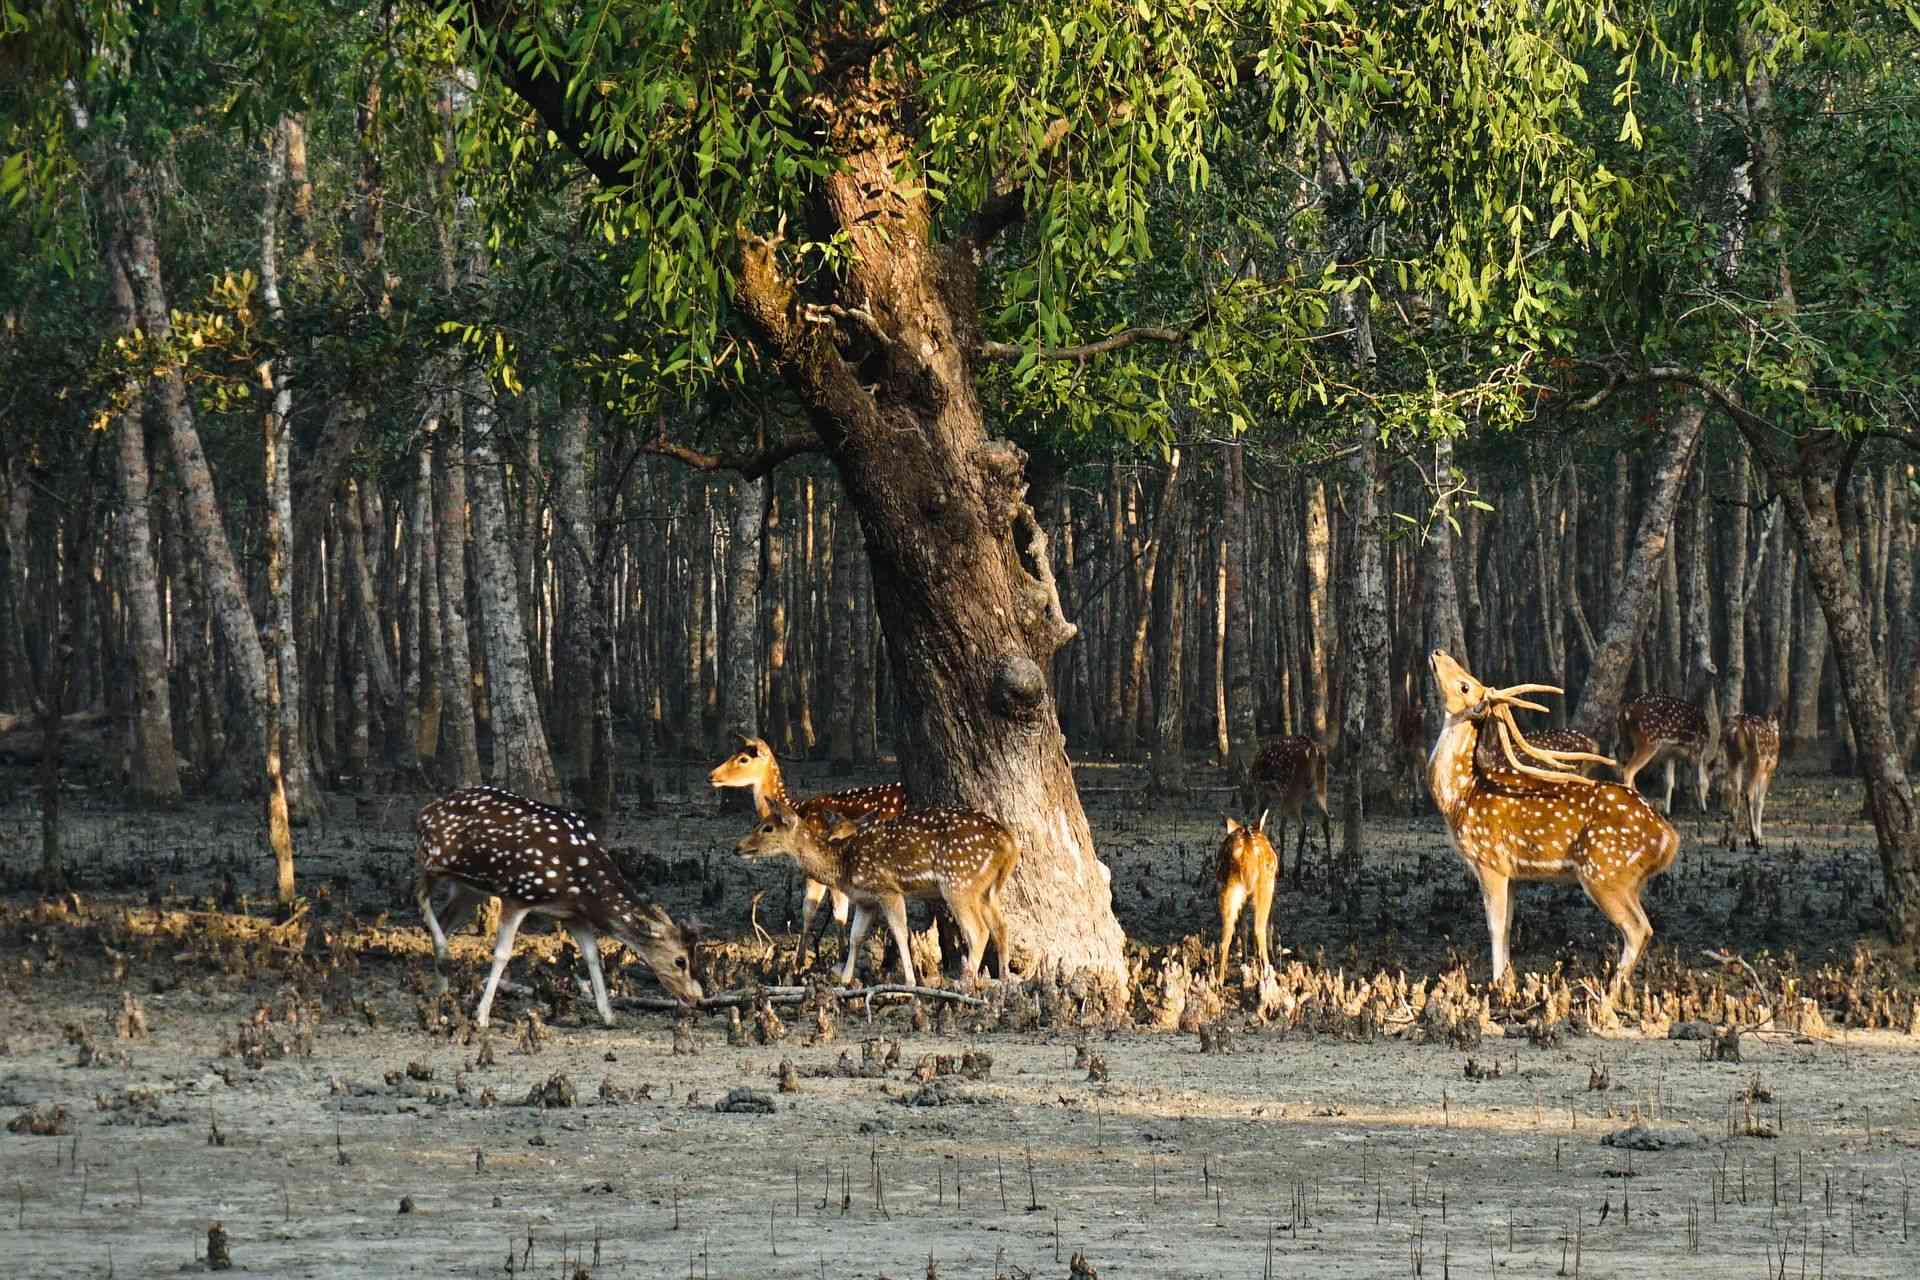 Sundarbans: The Worlds Largest Mangrove Forest